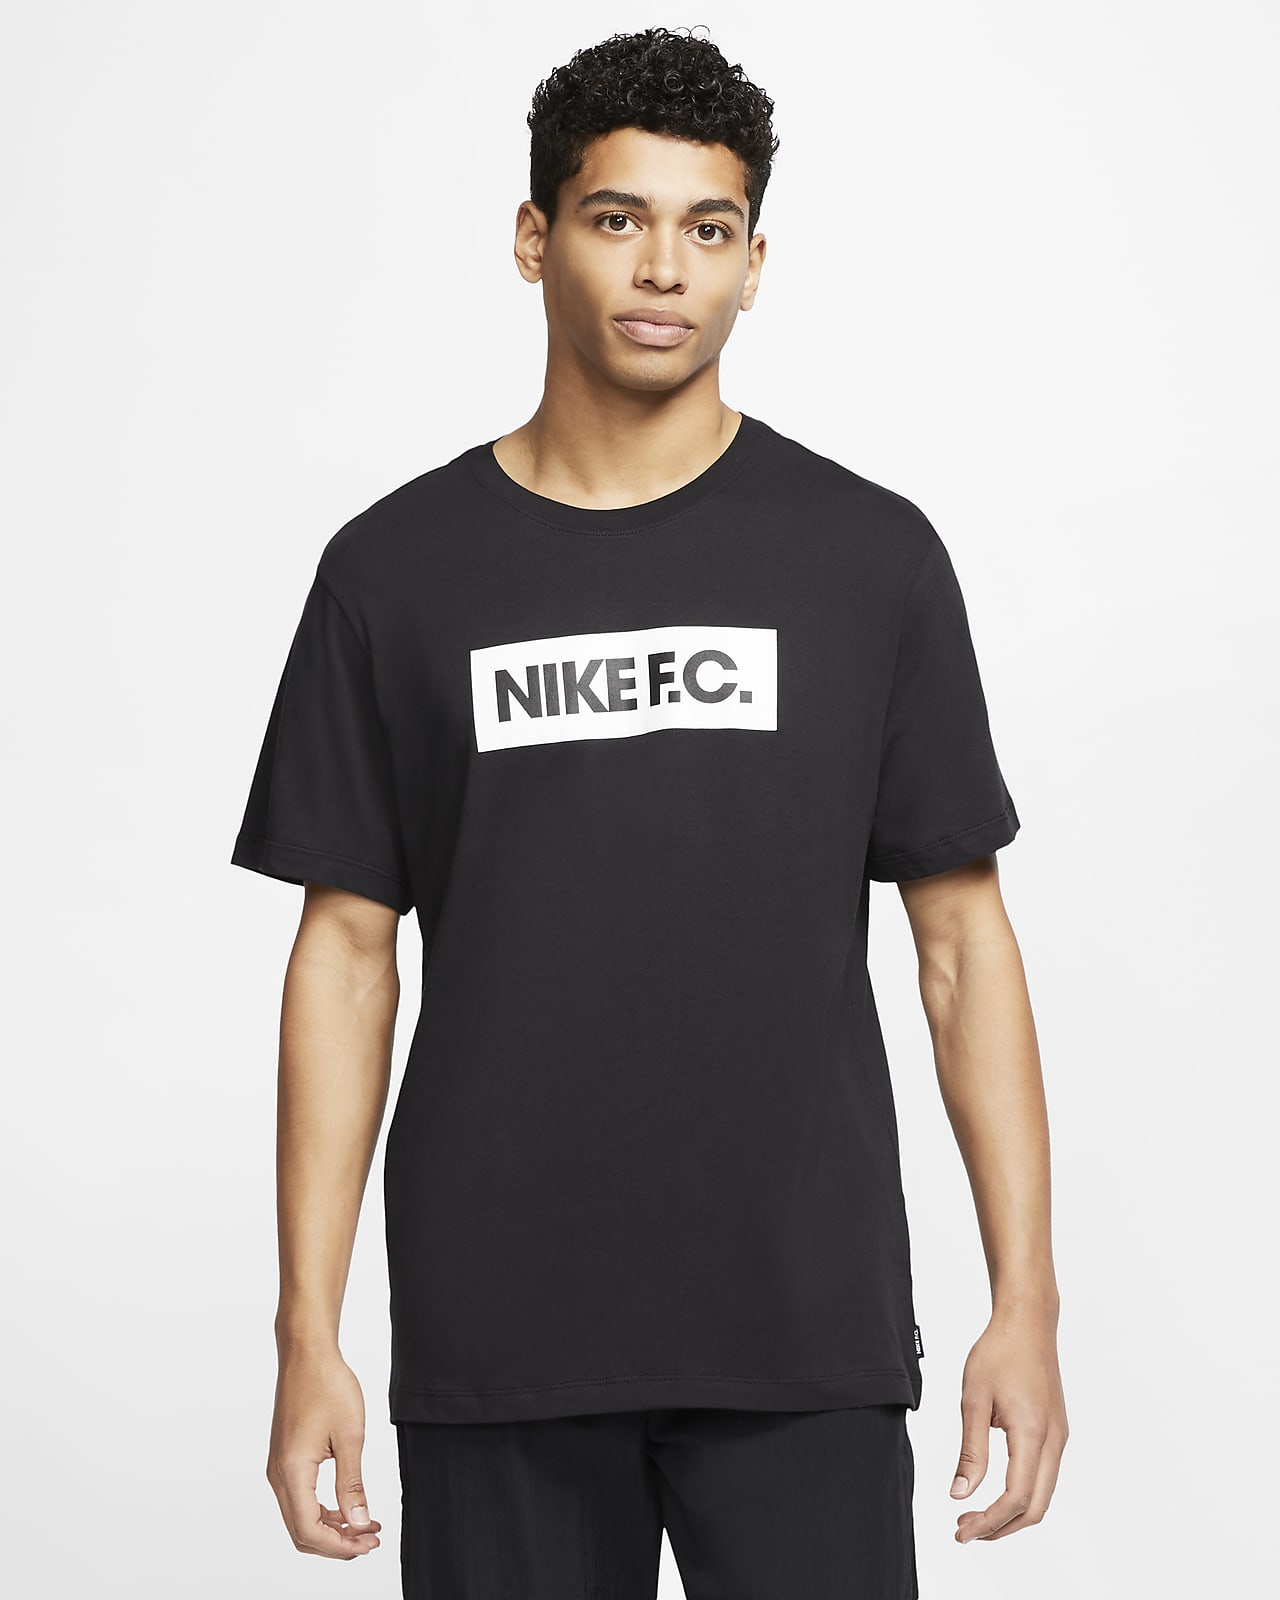 tierra Campaña Disfraz Nike F.C. SE11 Men's Football T-Shirt. Nike AU